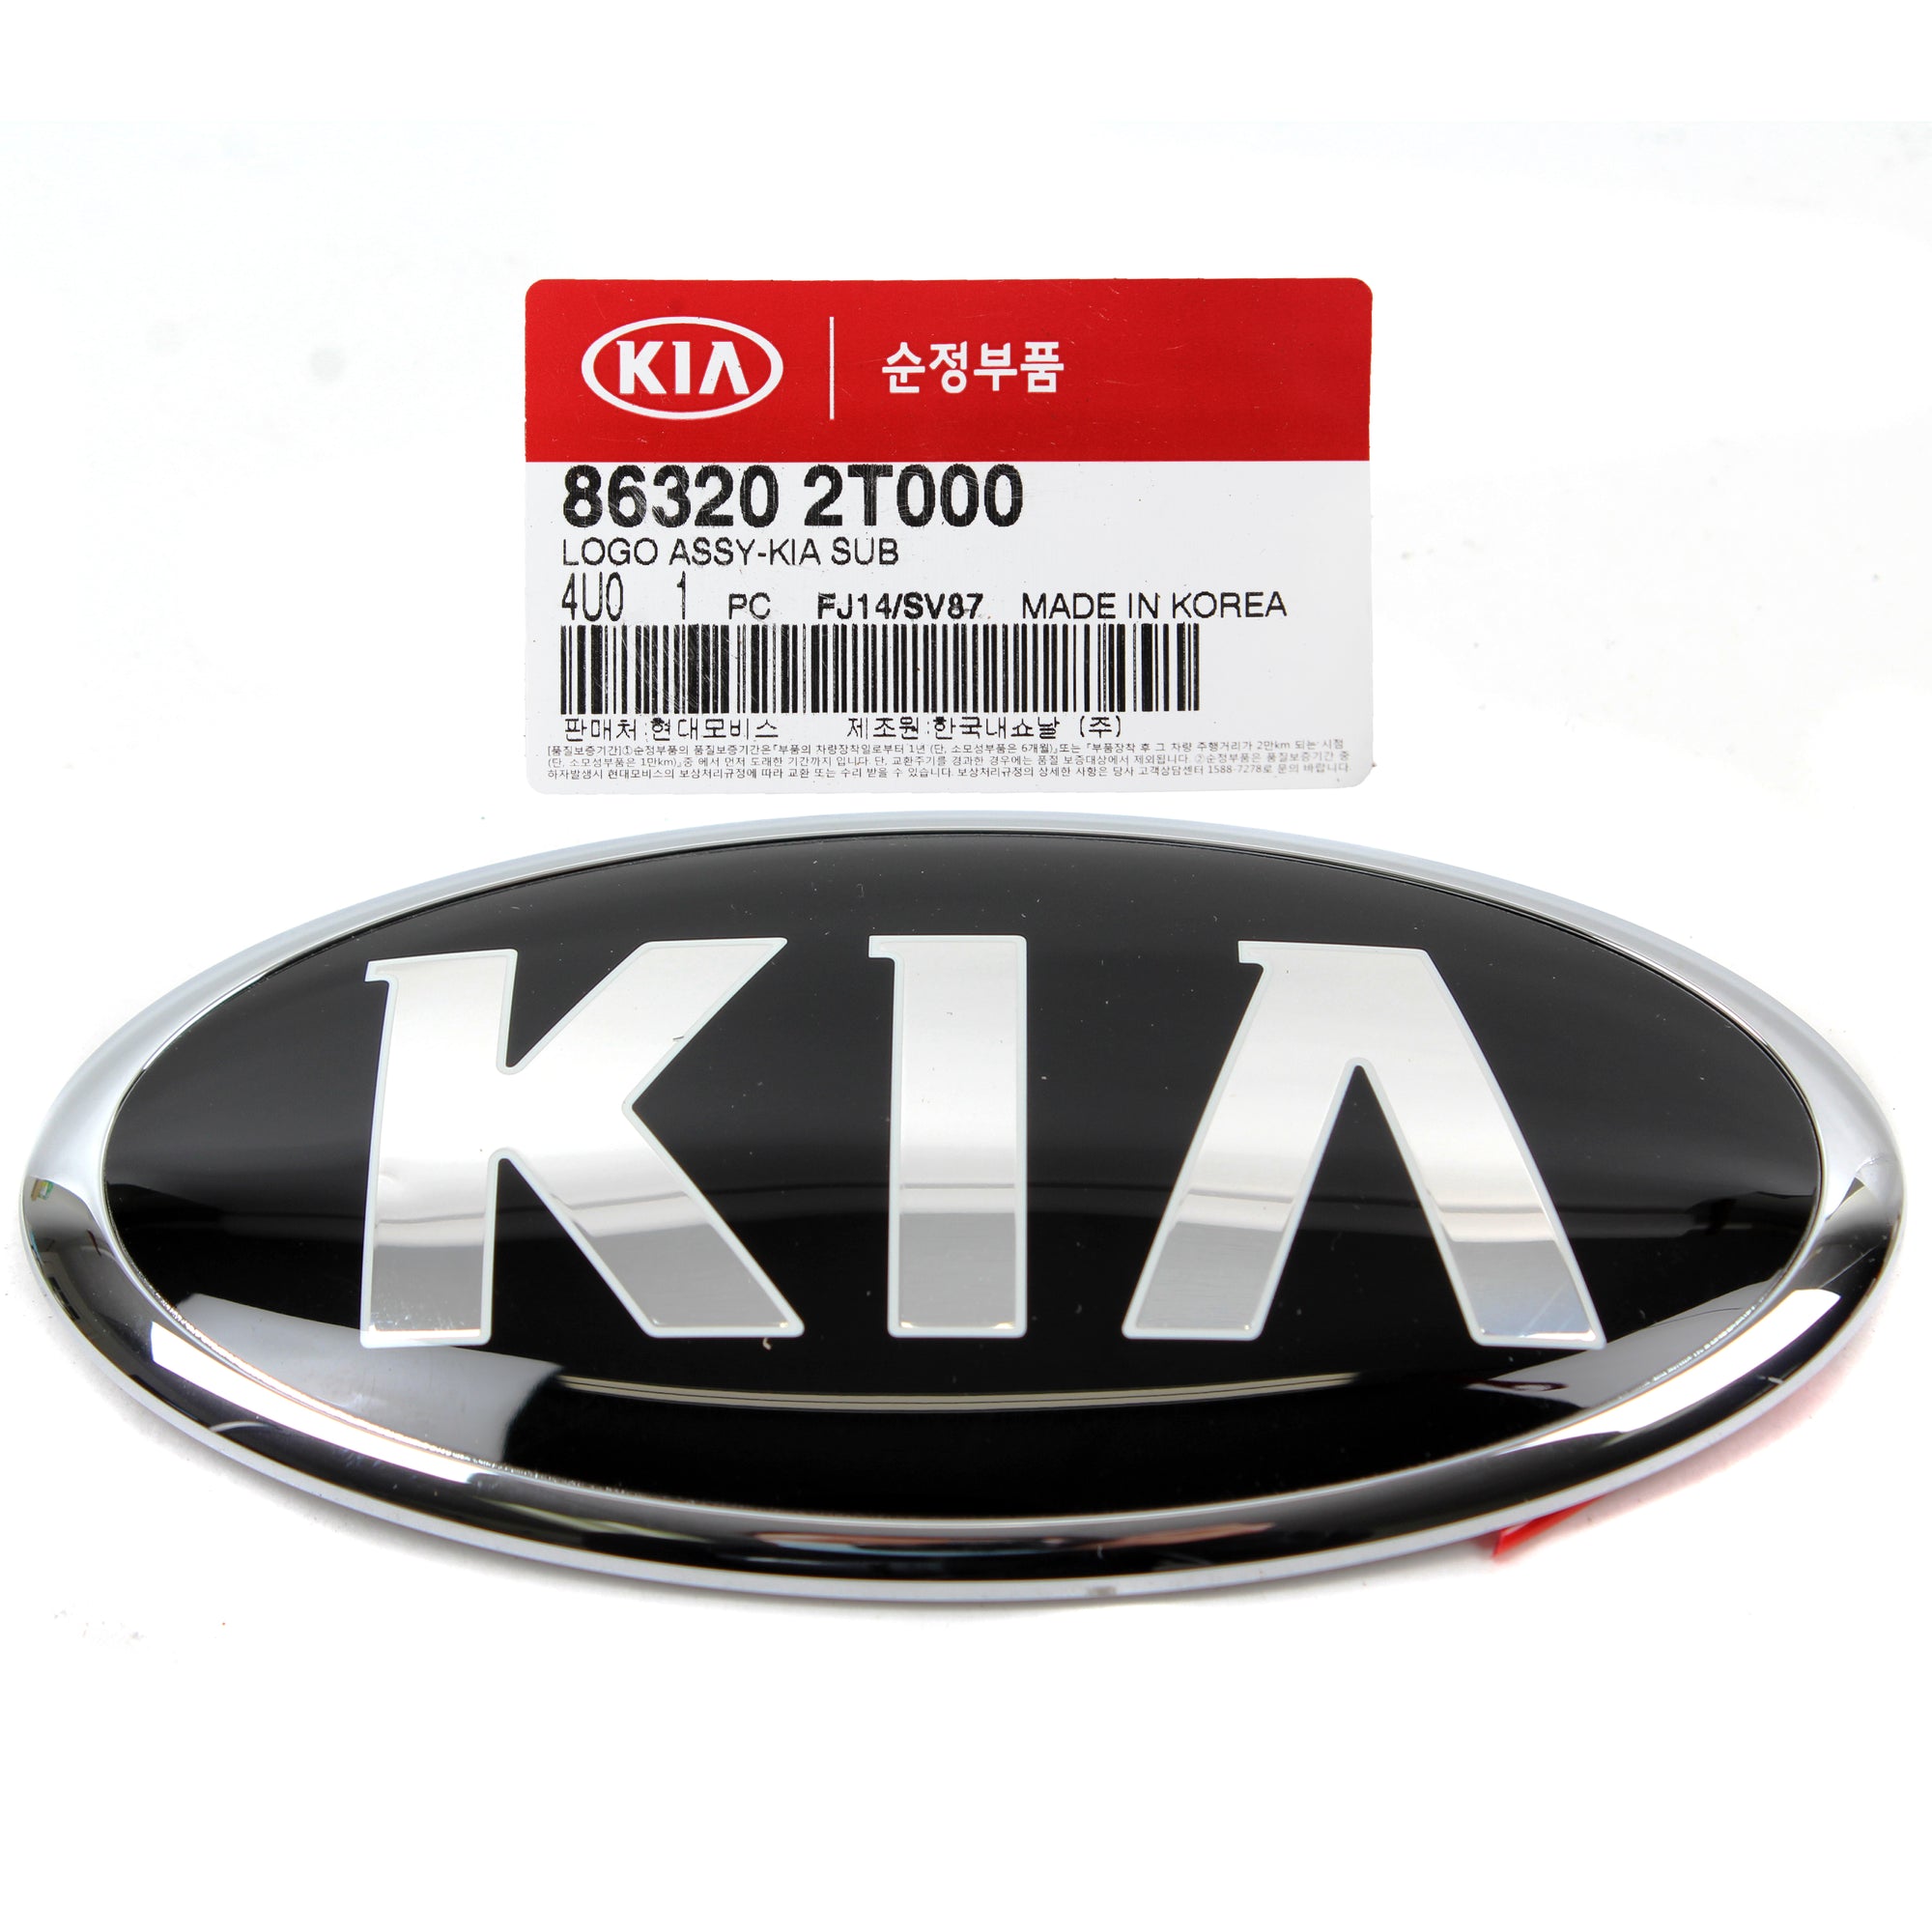 GENUINE Rear Trunk Lid Emblem Badge for 2011-2015 Kia Optima 863202T000